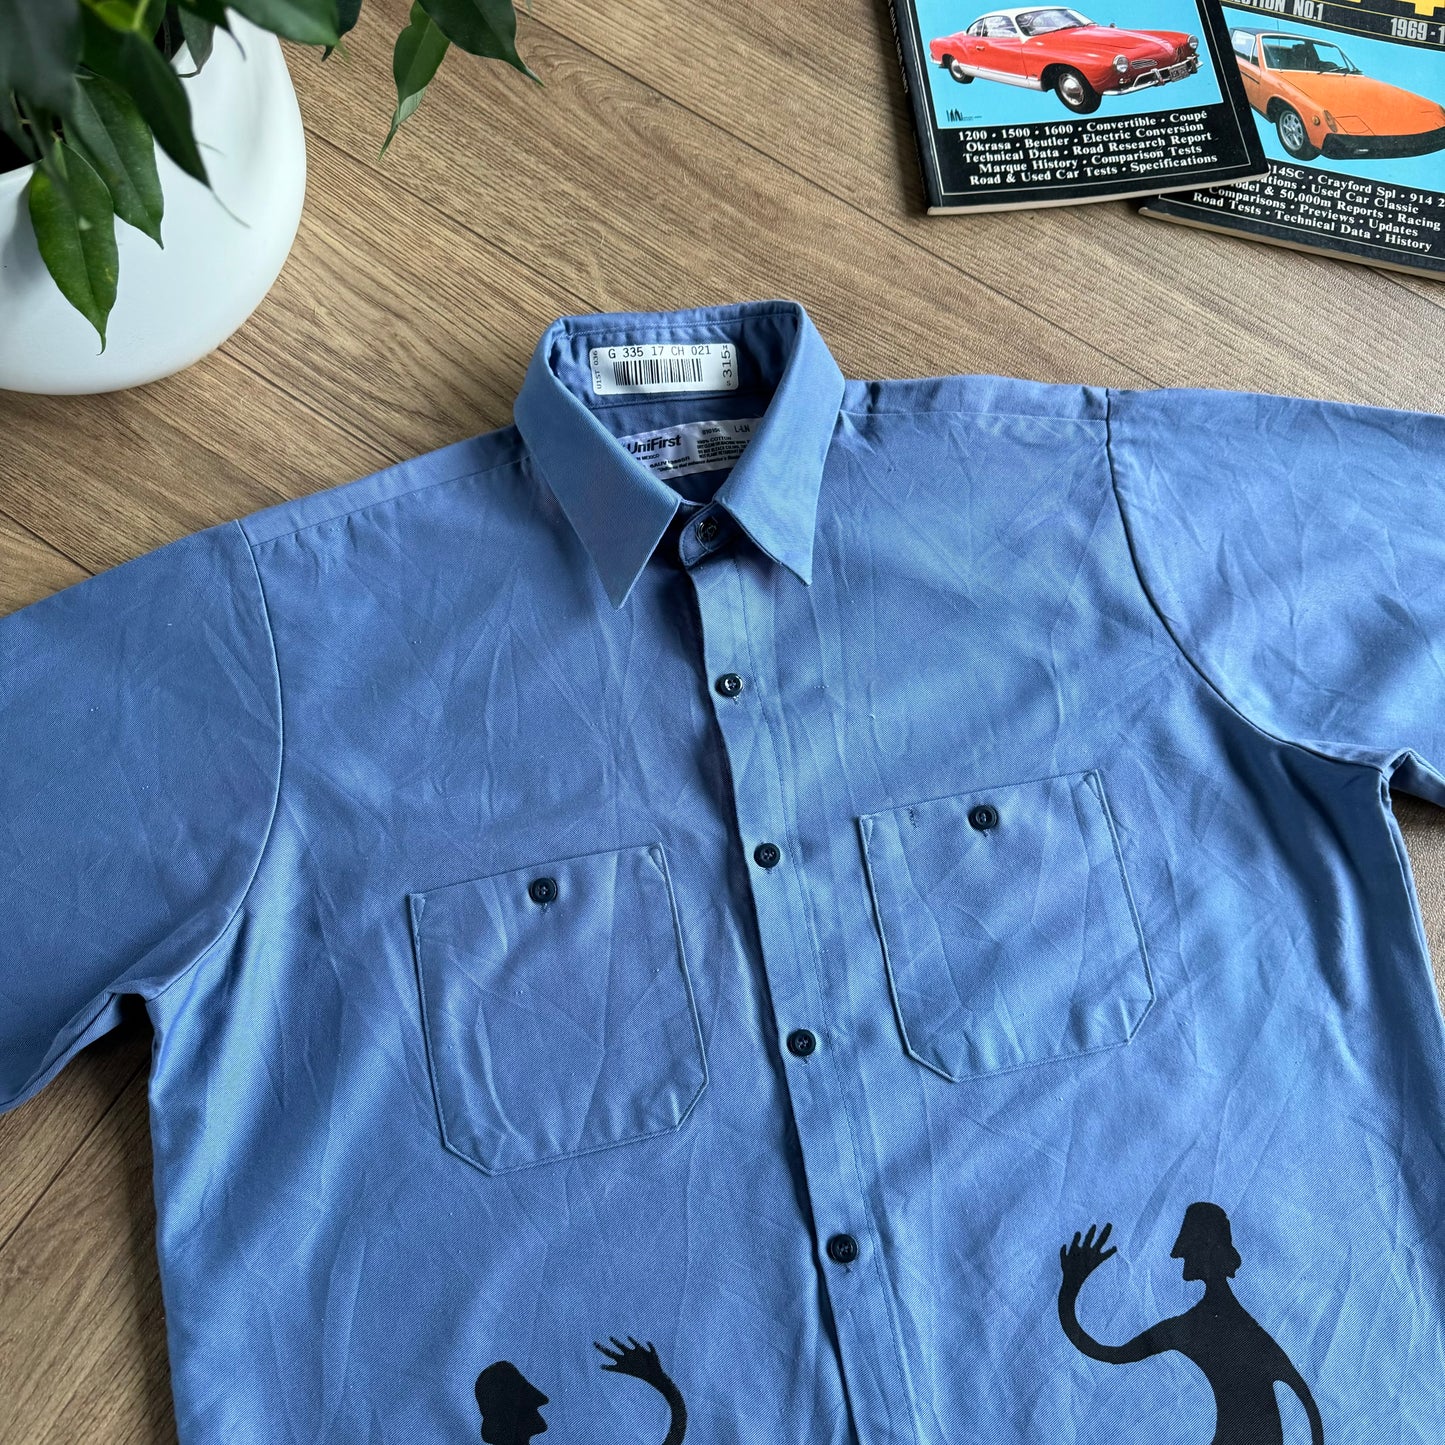 Stingray Reimagined “Stan” Short Sleeve Shirt, Size L Blue